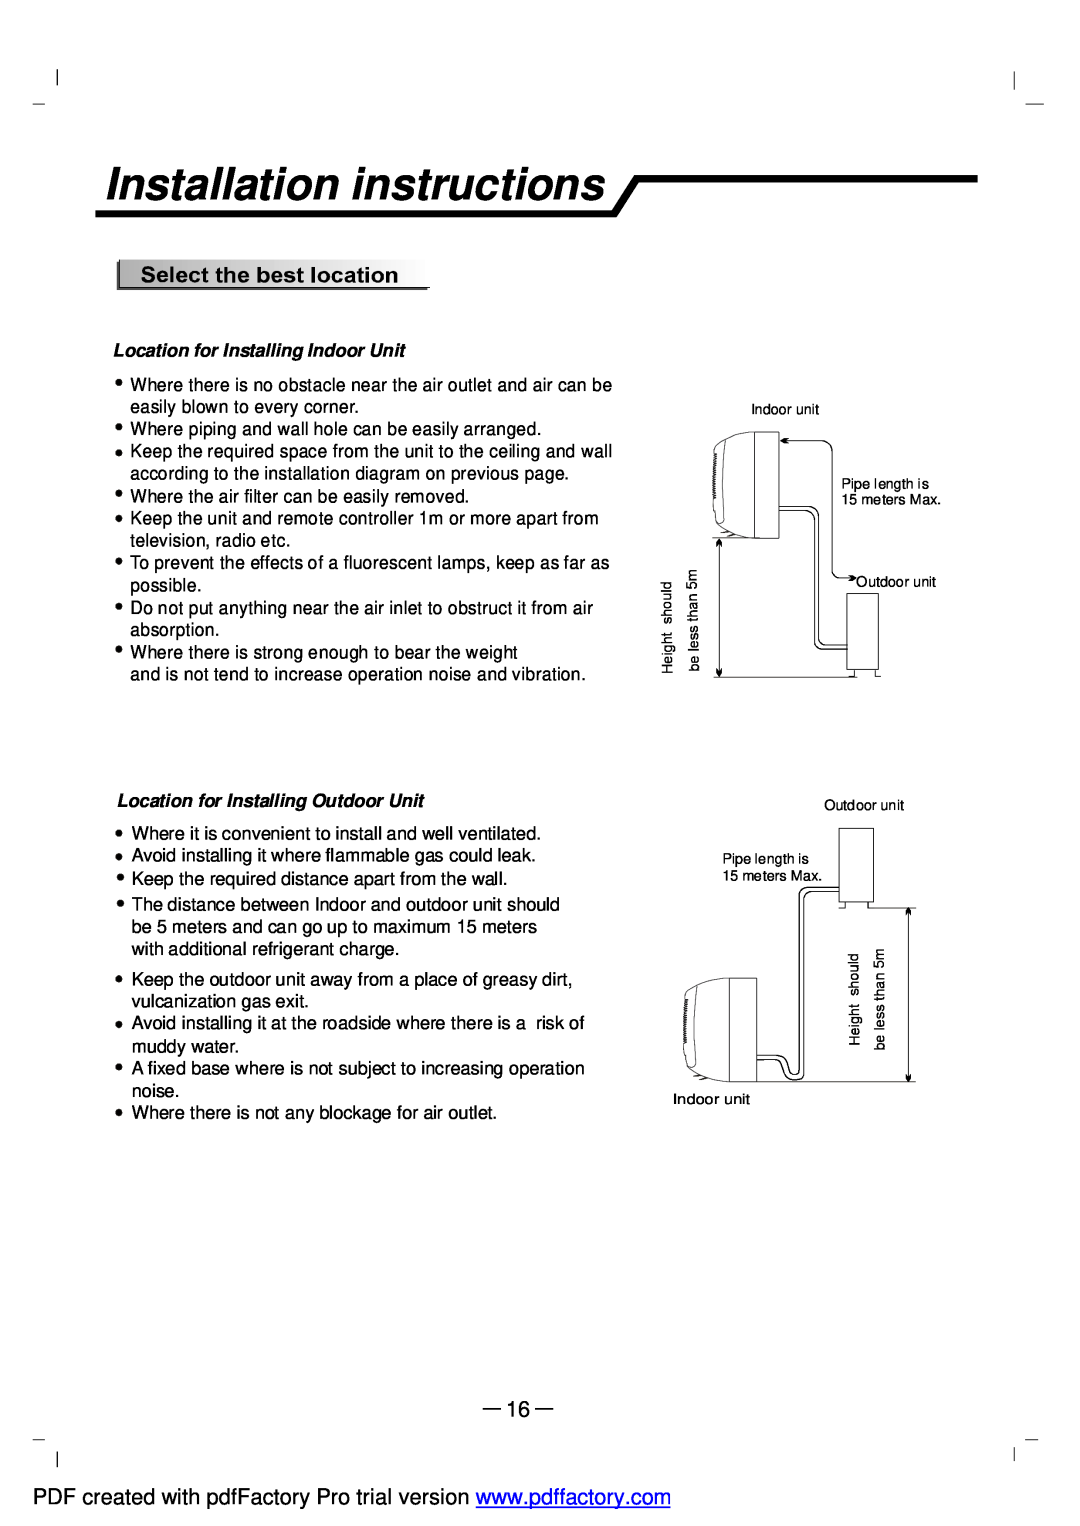 NEC RIH-3267 Installation instructions, Location for Installing Indoor Unit, Location for Installing Outdoor Unit 